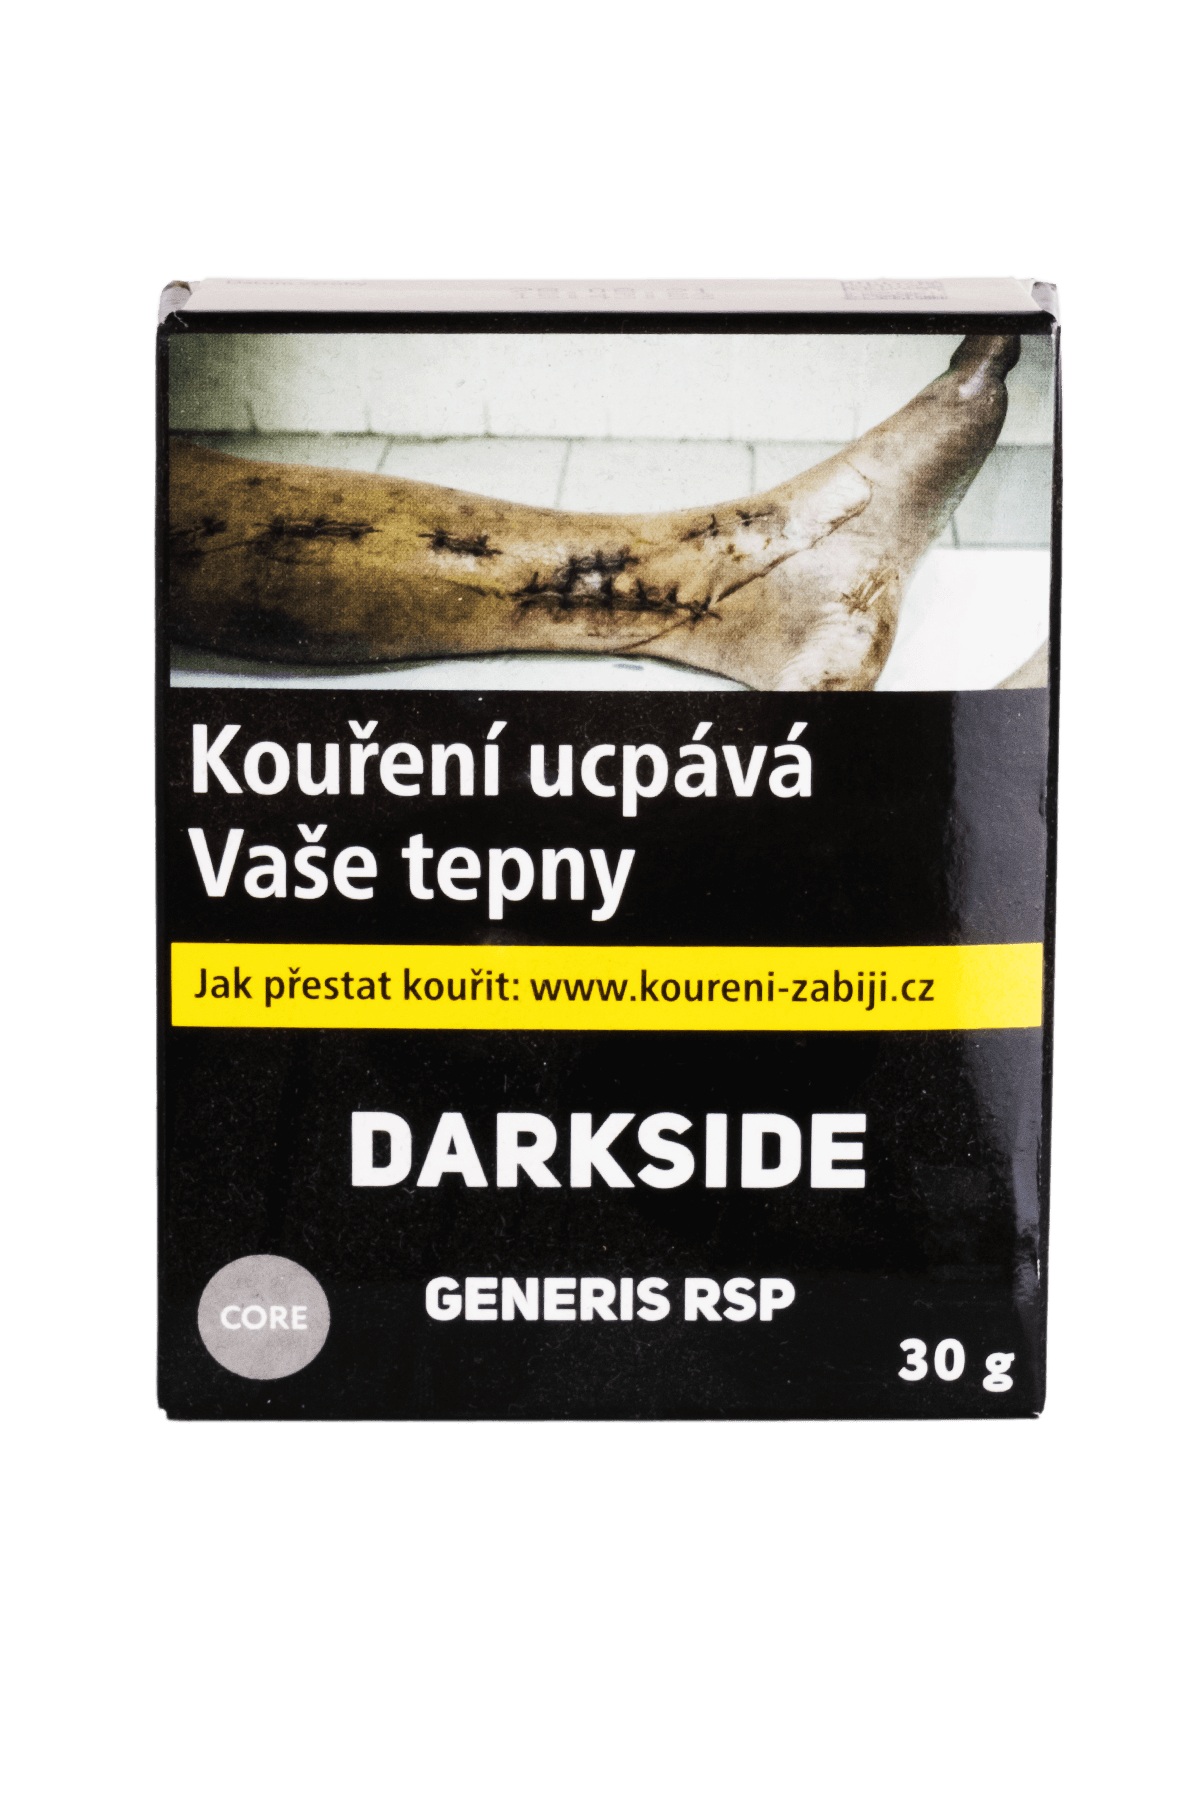 Tobacco - Darkside Core Generis Rsp 30g